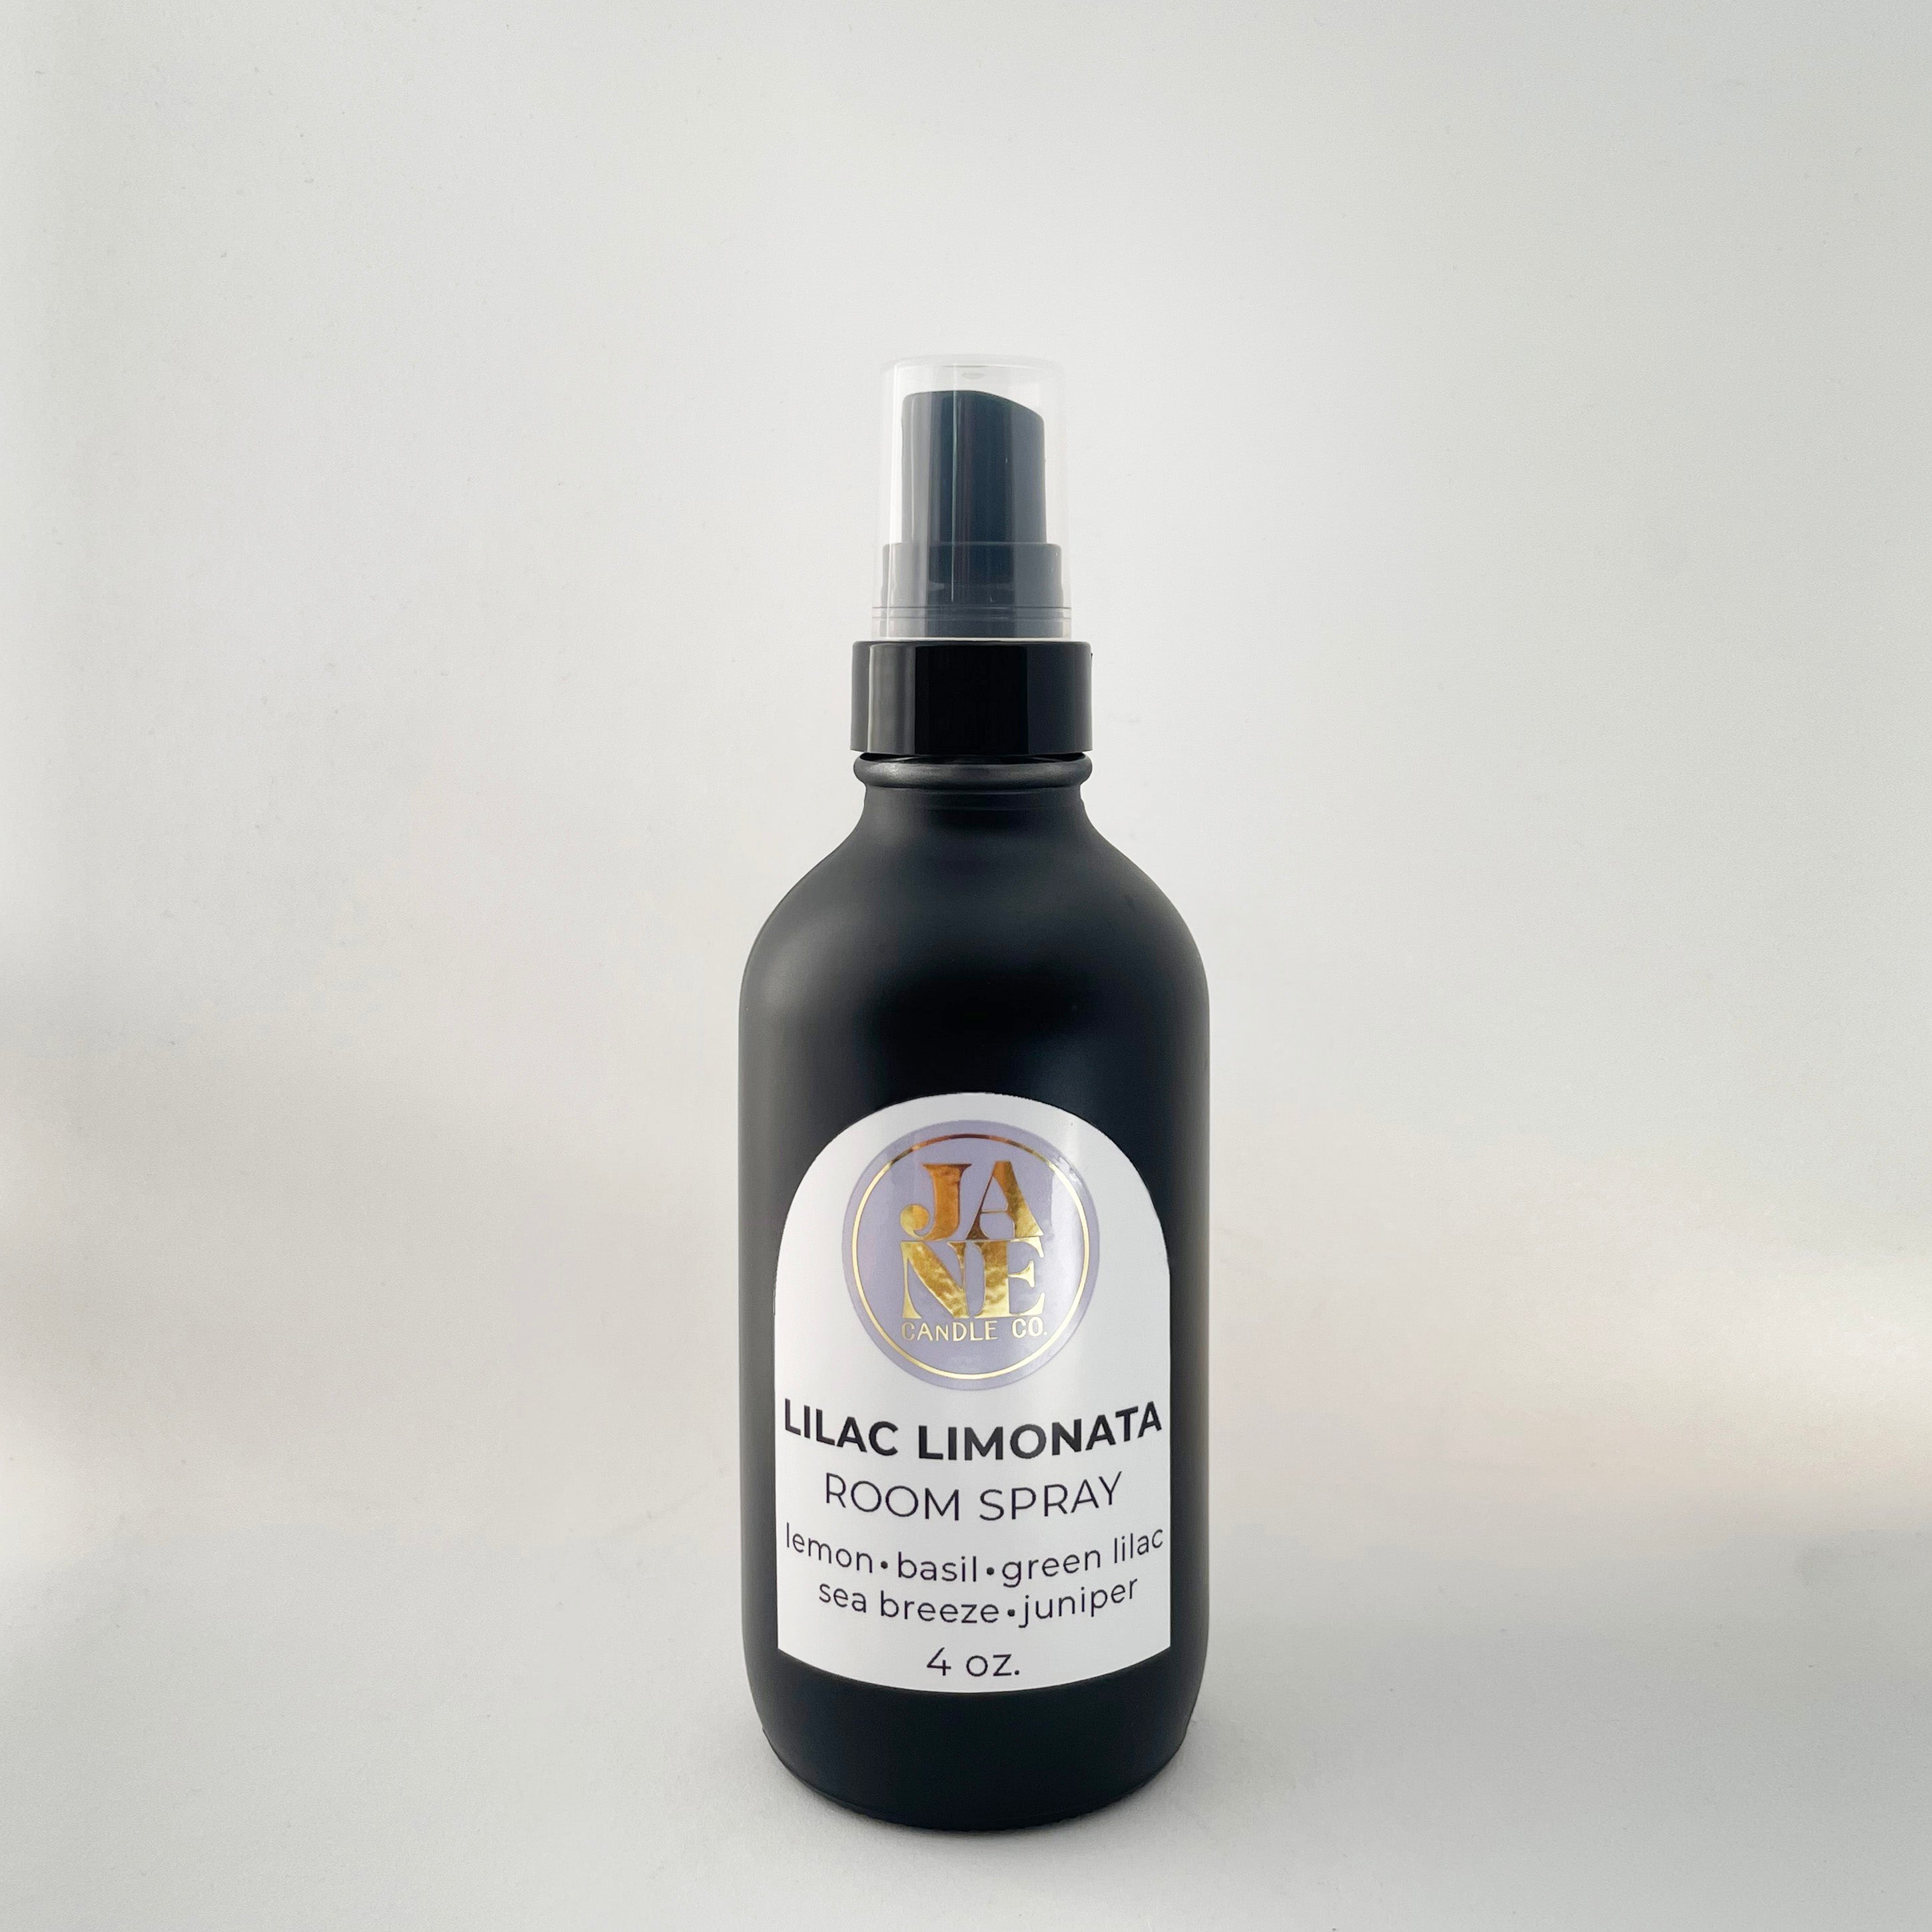 Lilac Limonata Room Spray